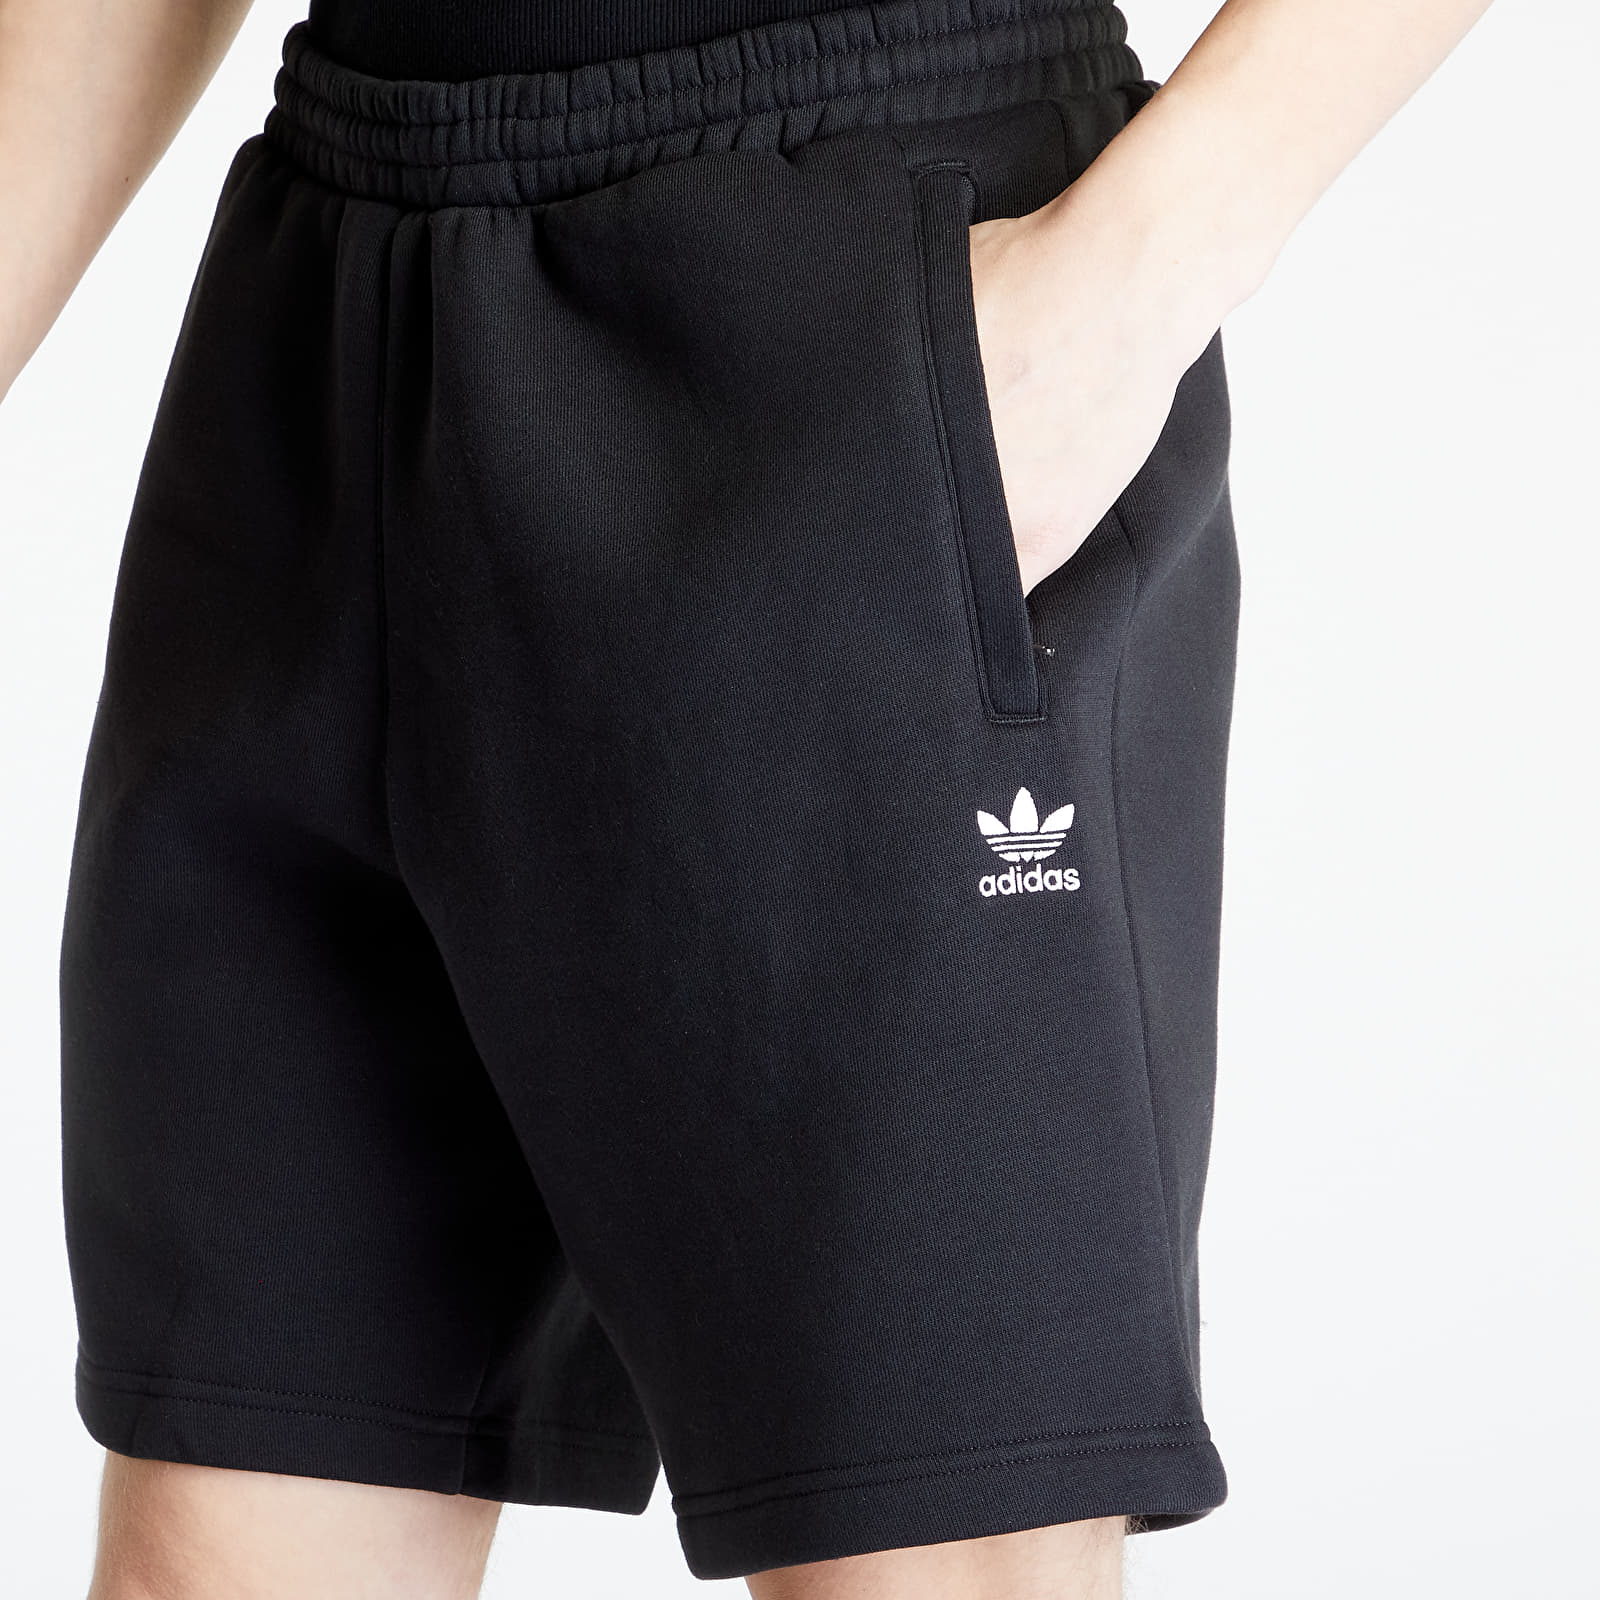 Shorts adidas Originals Essential Short Black | Queens | Sweatshirts